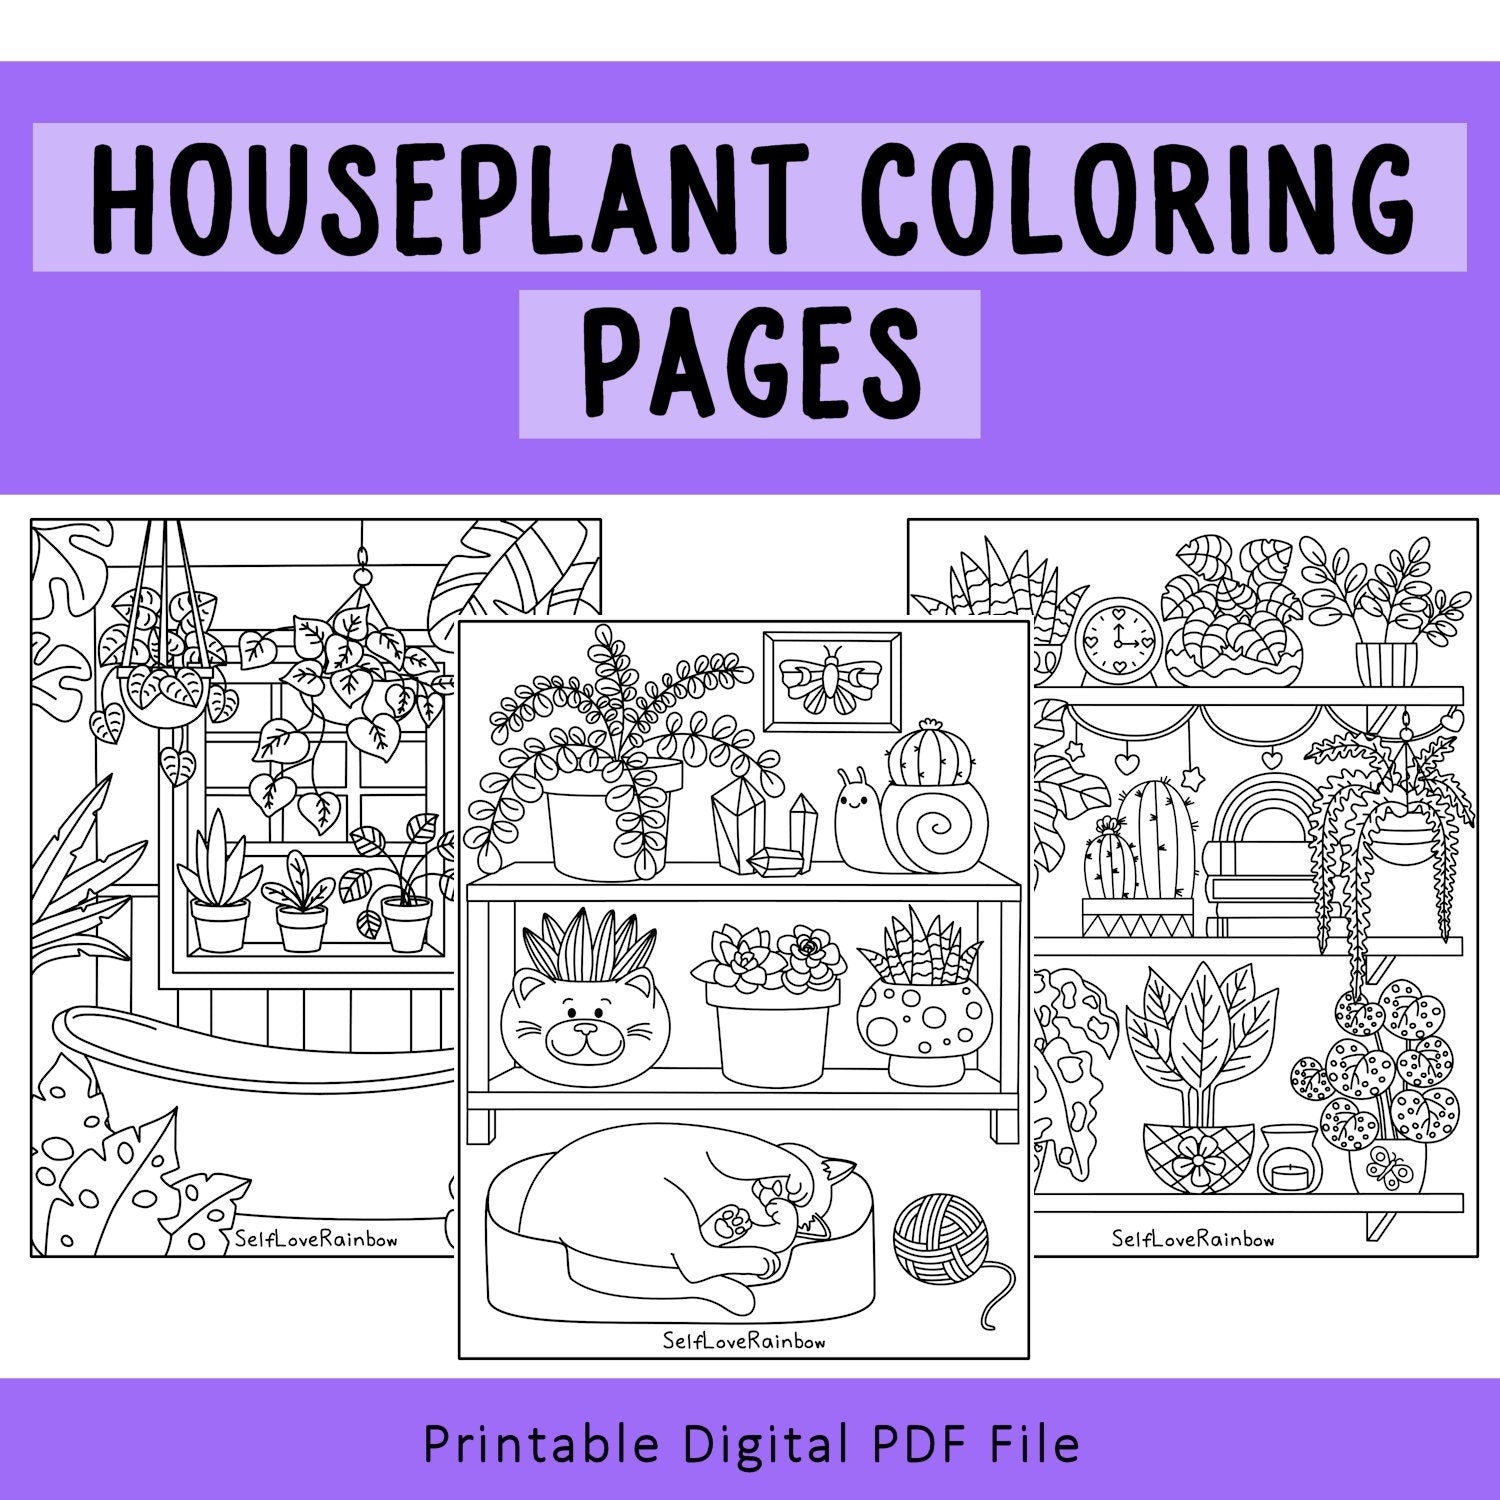 House plant coloring pages â